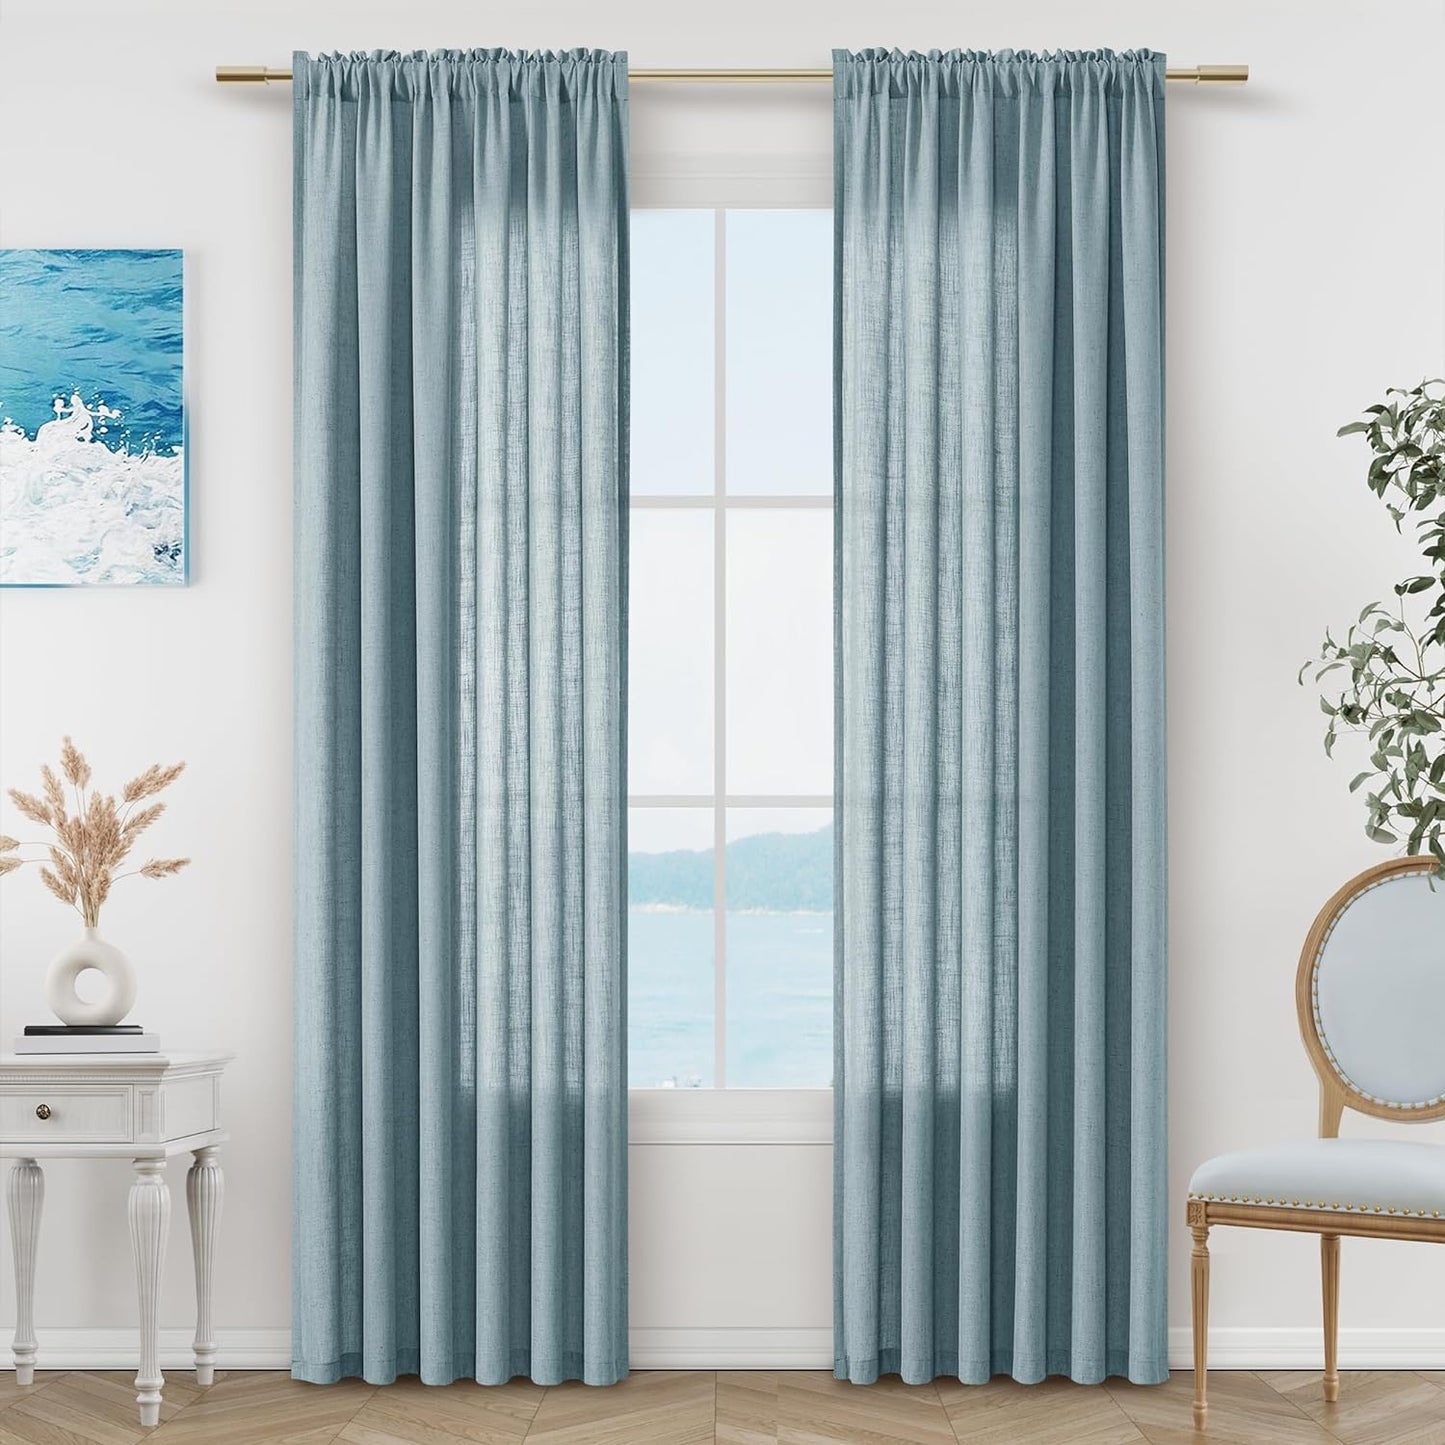 Guken Blue Linen Curtains 84 Inch Length for Living Room Bedroom 2 Panels Set Rod Pocket Light Filtering Semi Sheer Window Curtains 52 Inch Width Boho Farmhouse Linen Drapes Dusty Blue, W52Xl84  Guken   